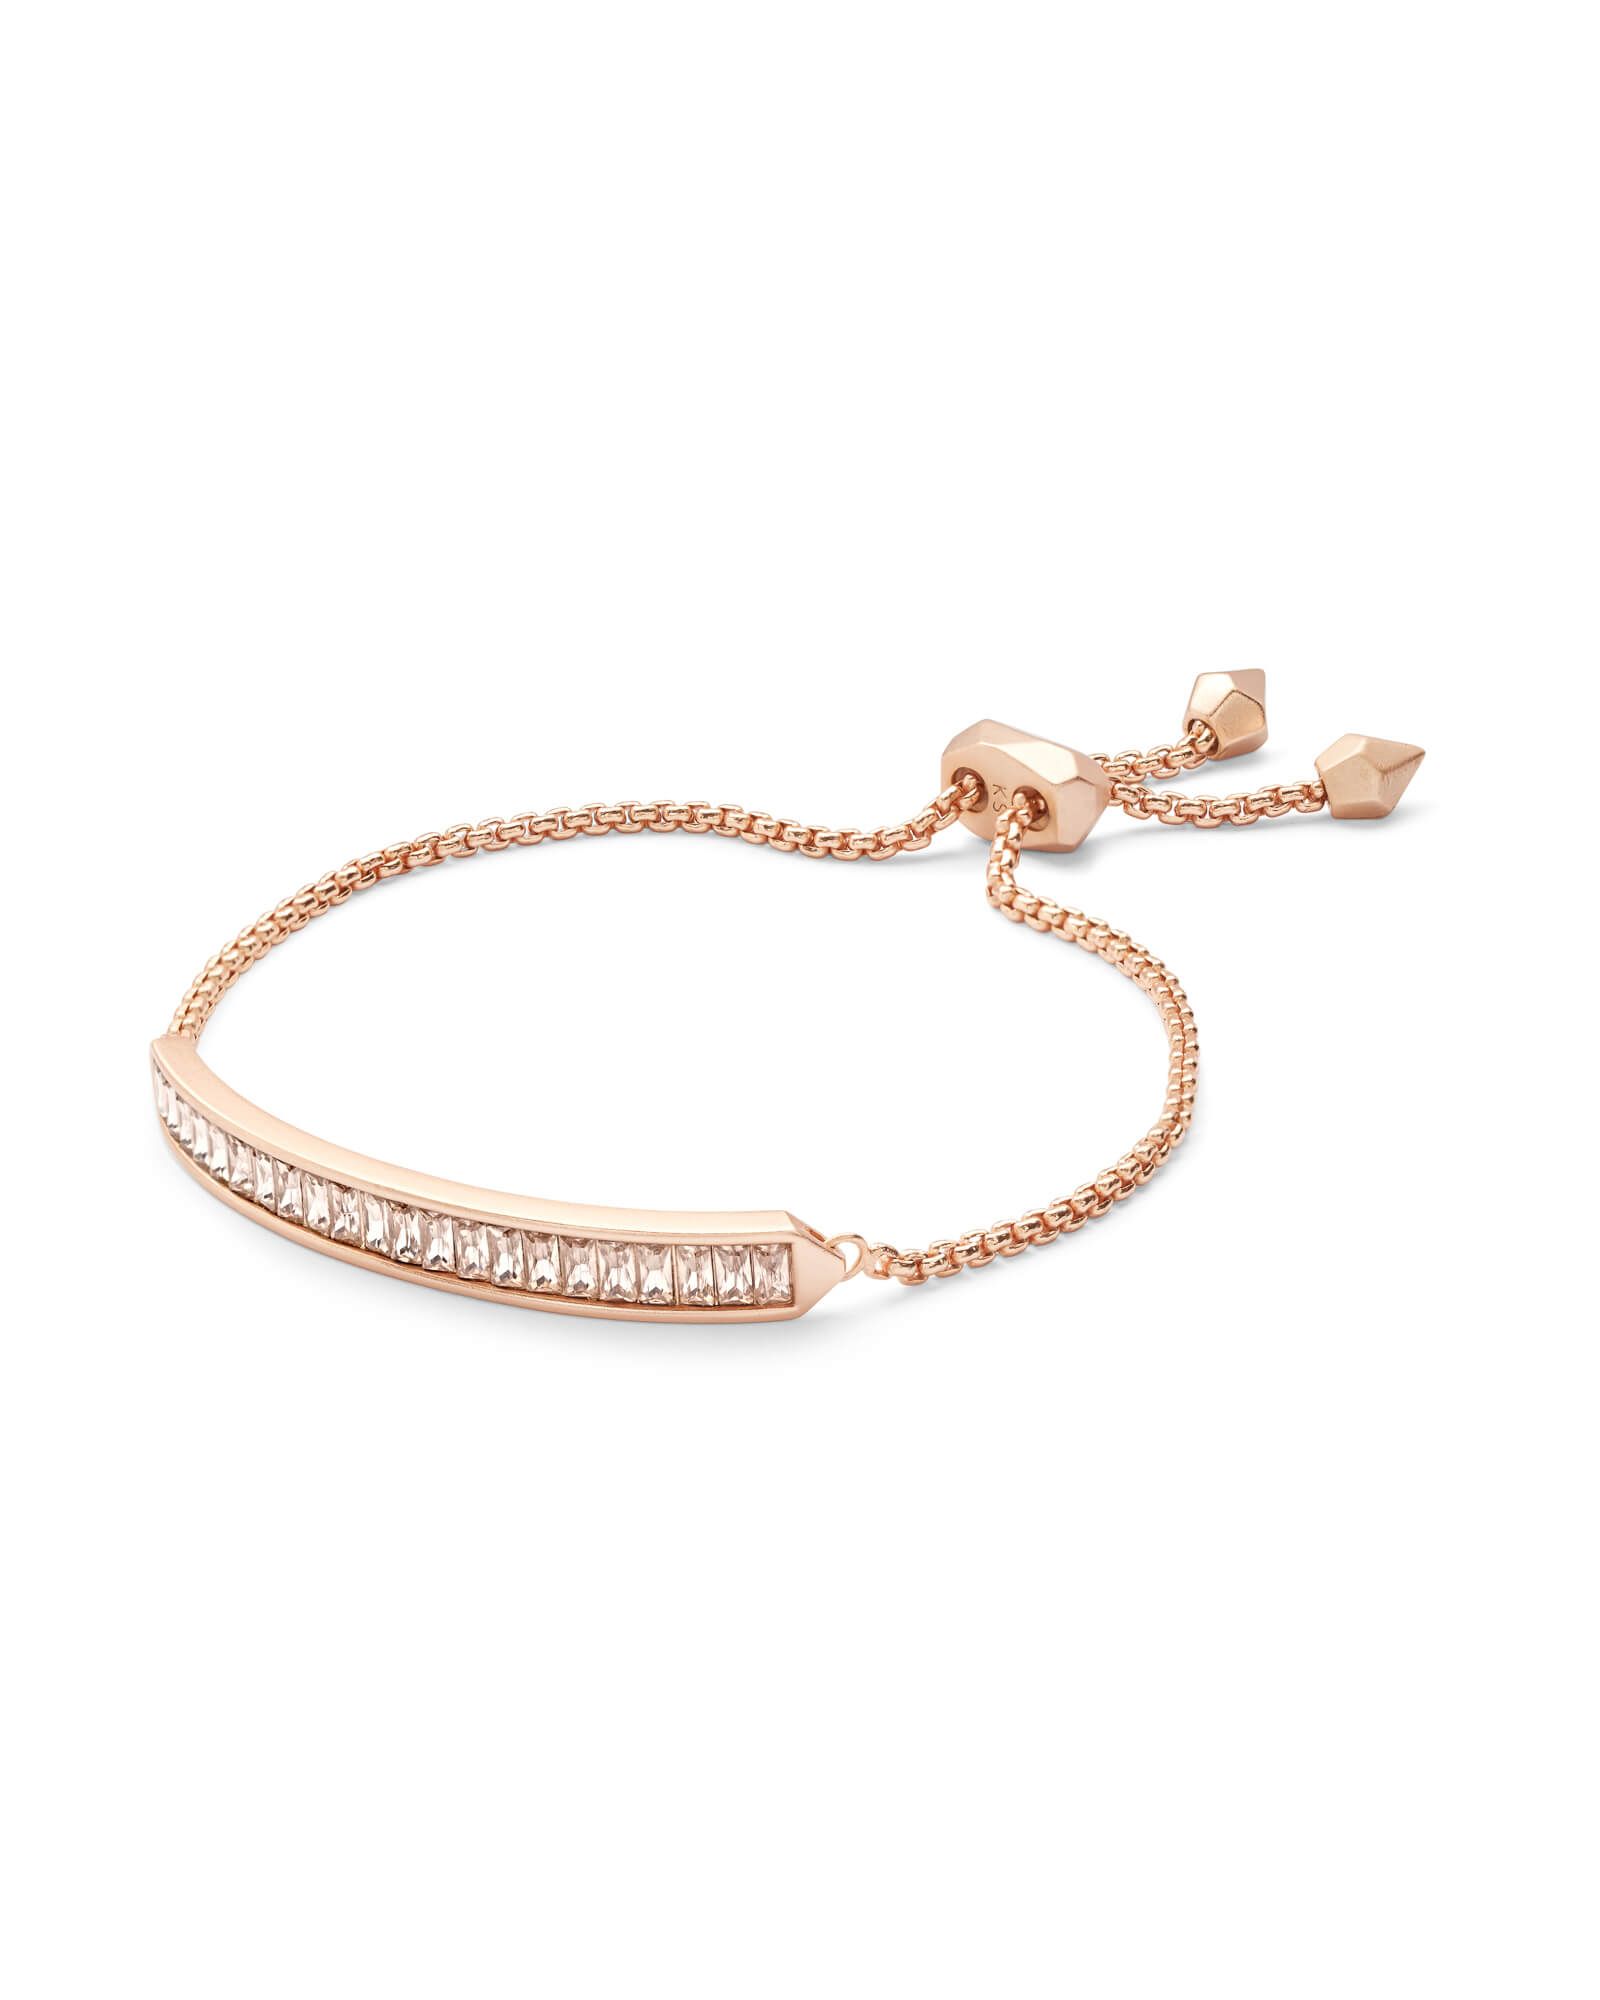 Jack Rose Gold Chain Bracelet in Blush Crystal | Kendra Scott | Kendra Scott